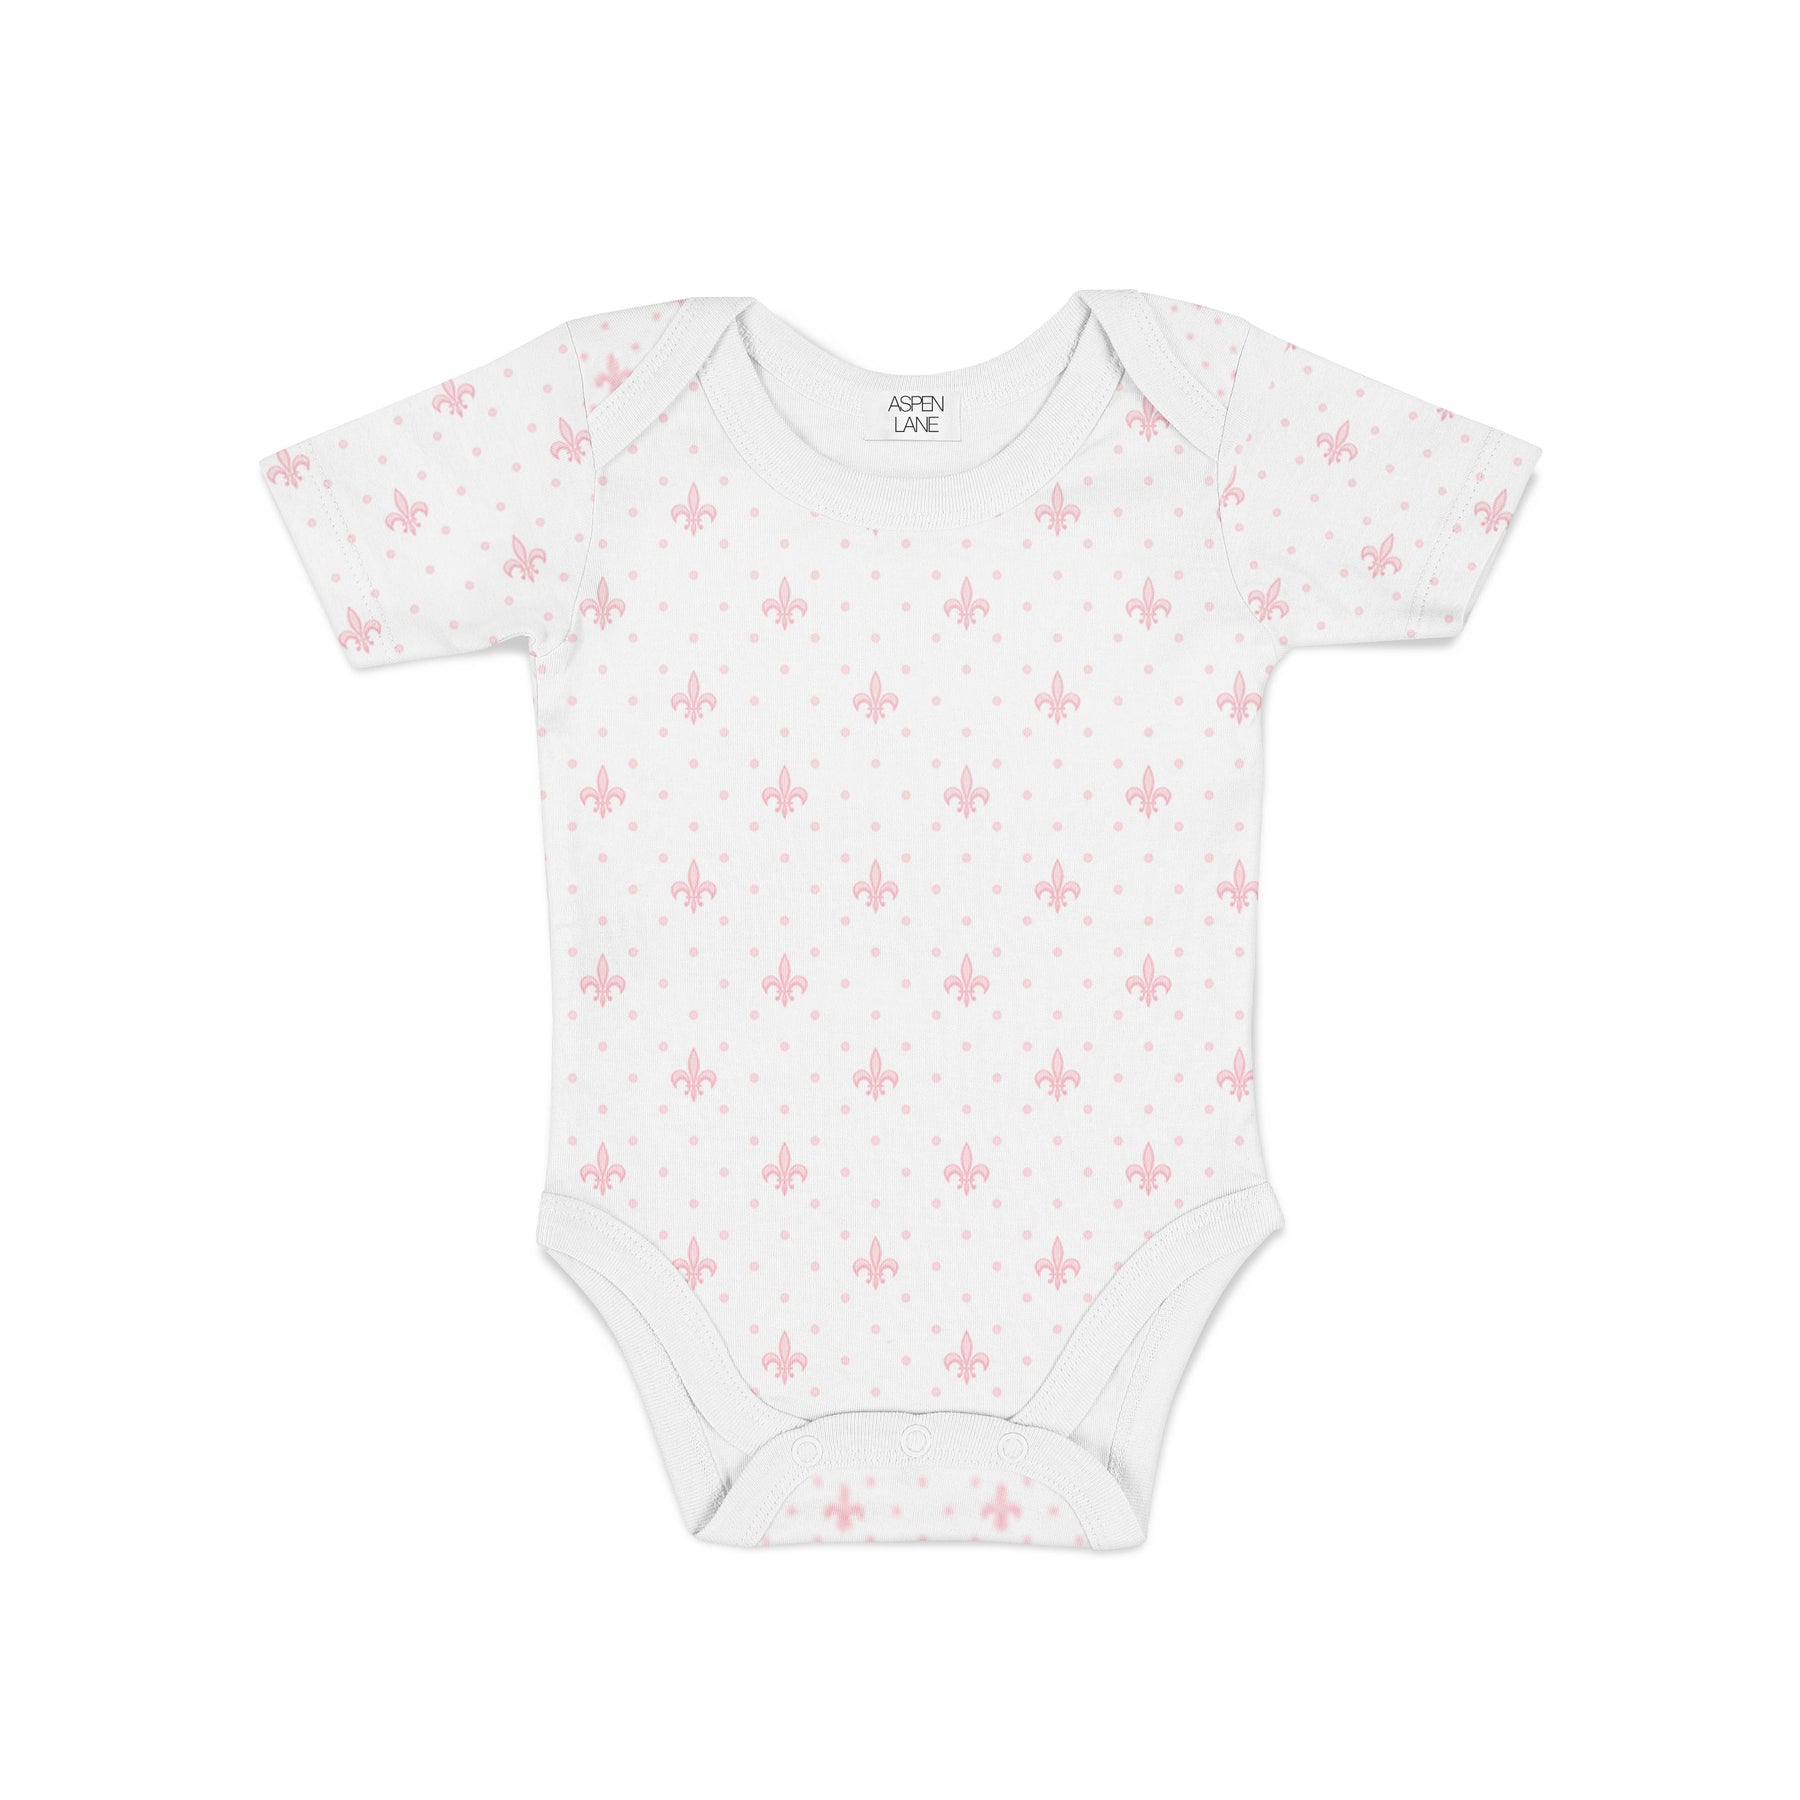 Fleur de Lis Bodysuit : Baby Pink - Aspen Lane 